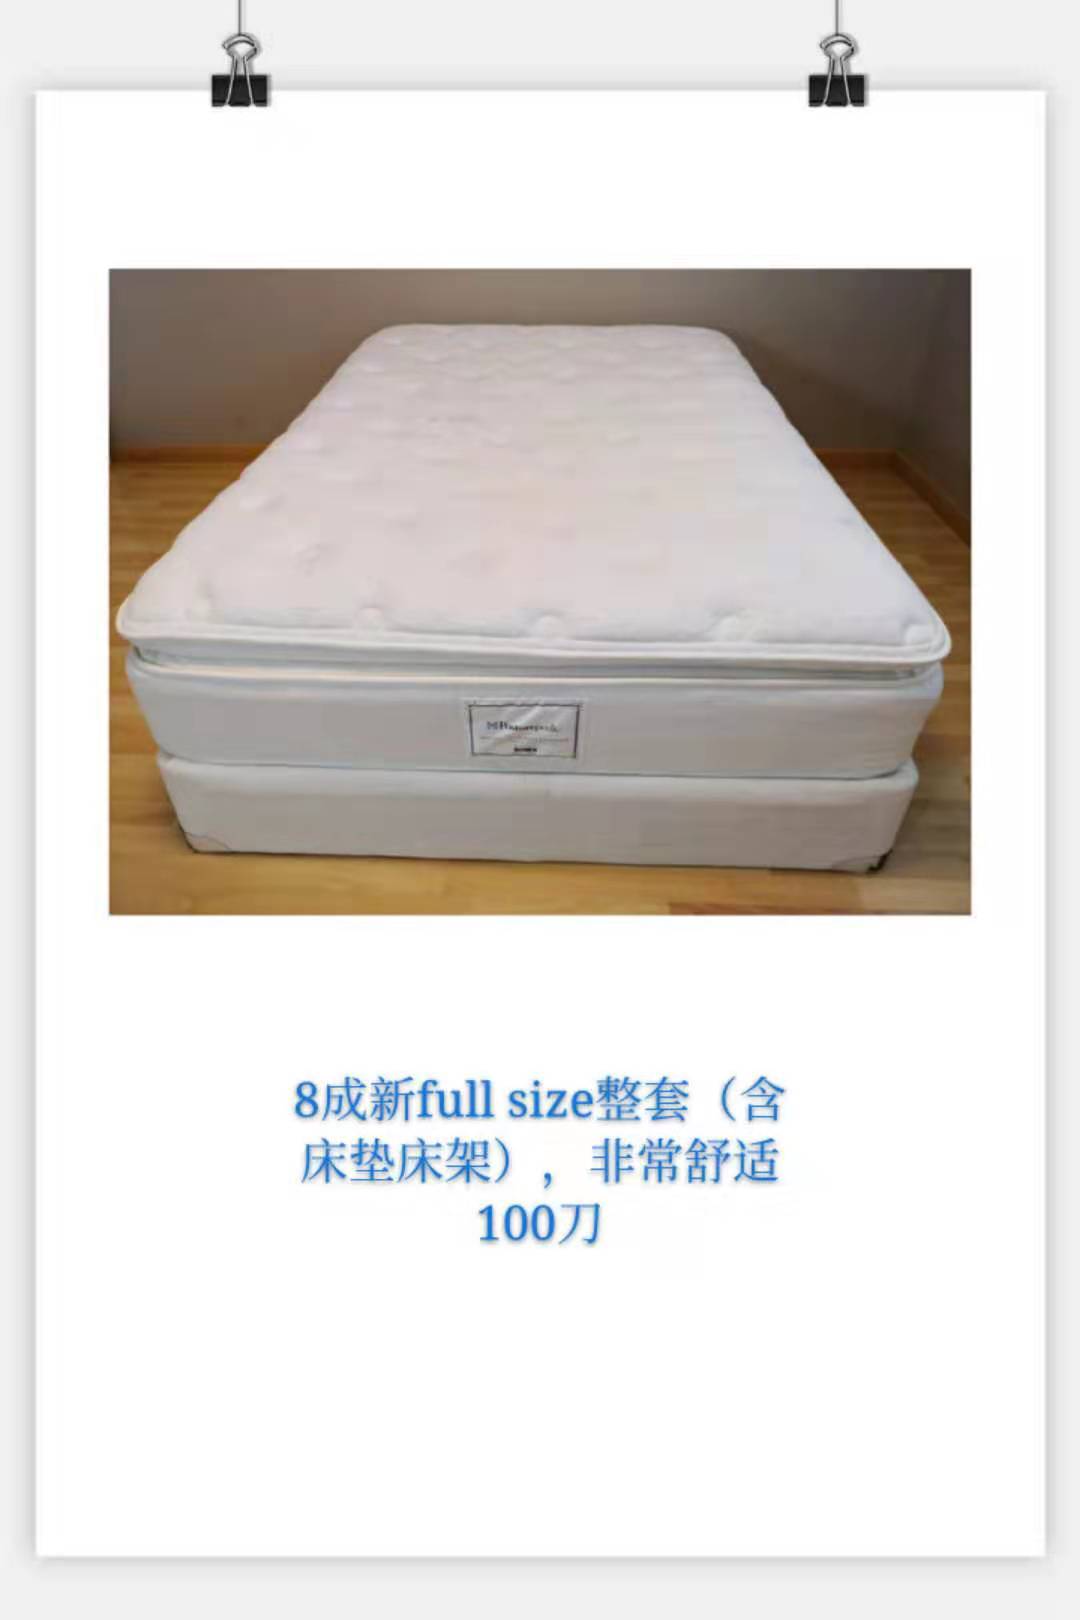 FullSize床垫及床架